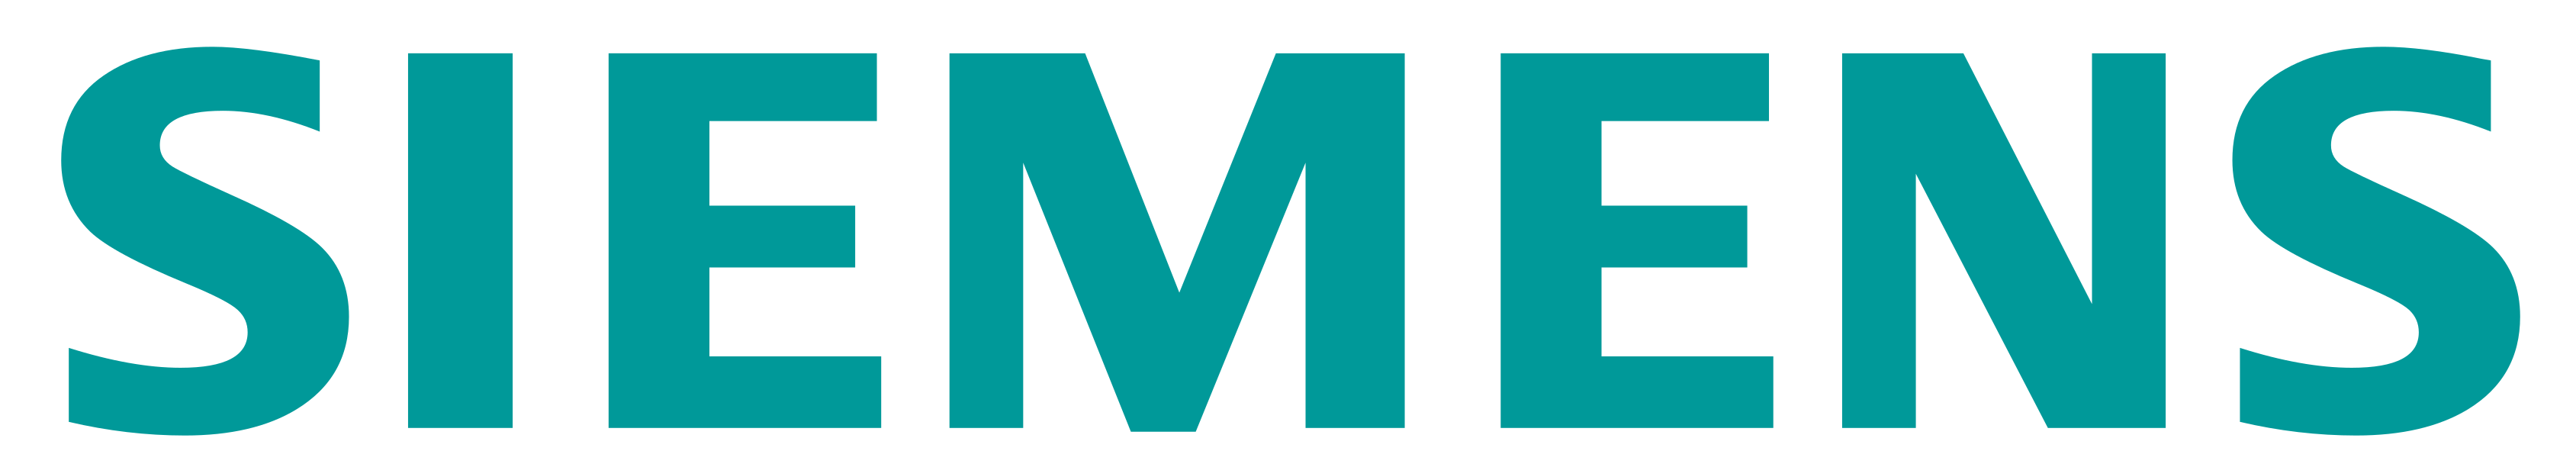 Siemens Logo logo